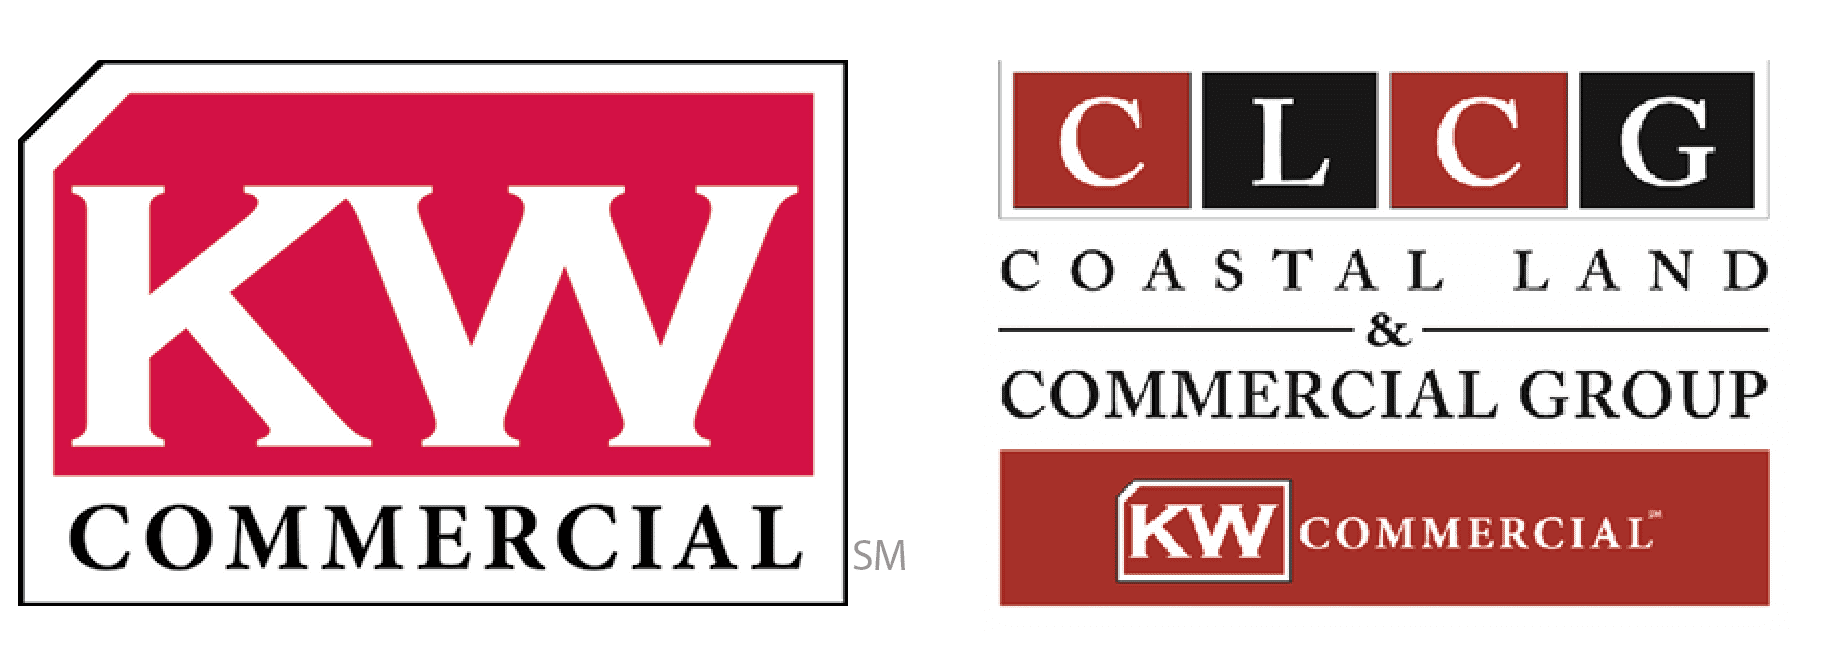 Coastal Land & Commercial Group